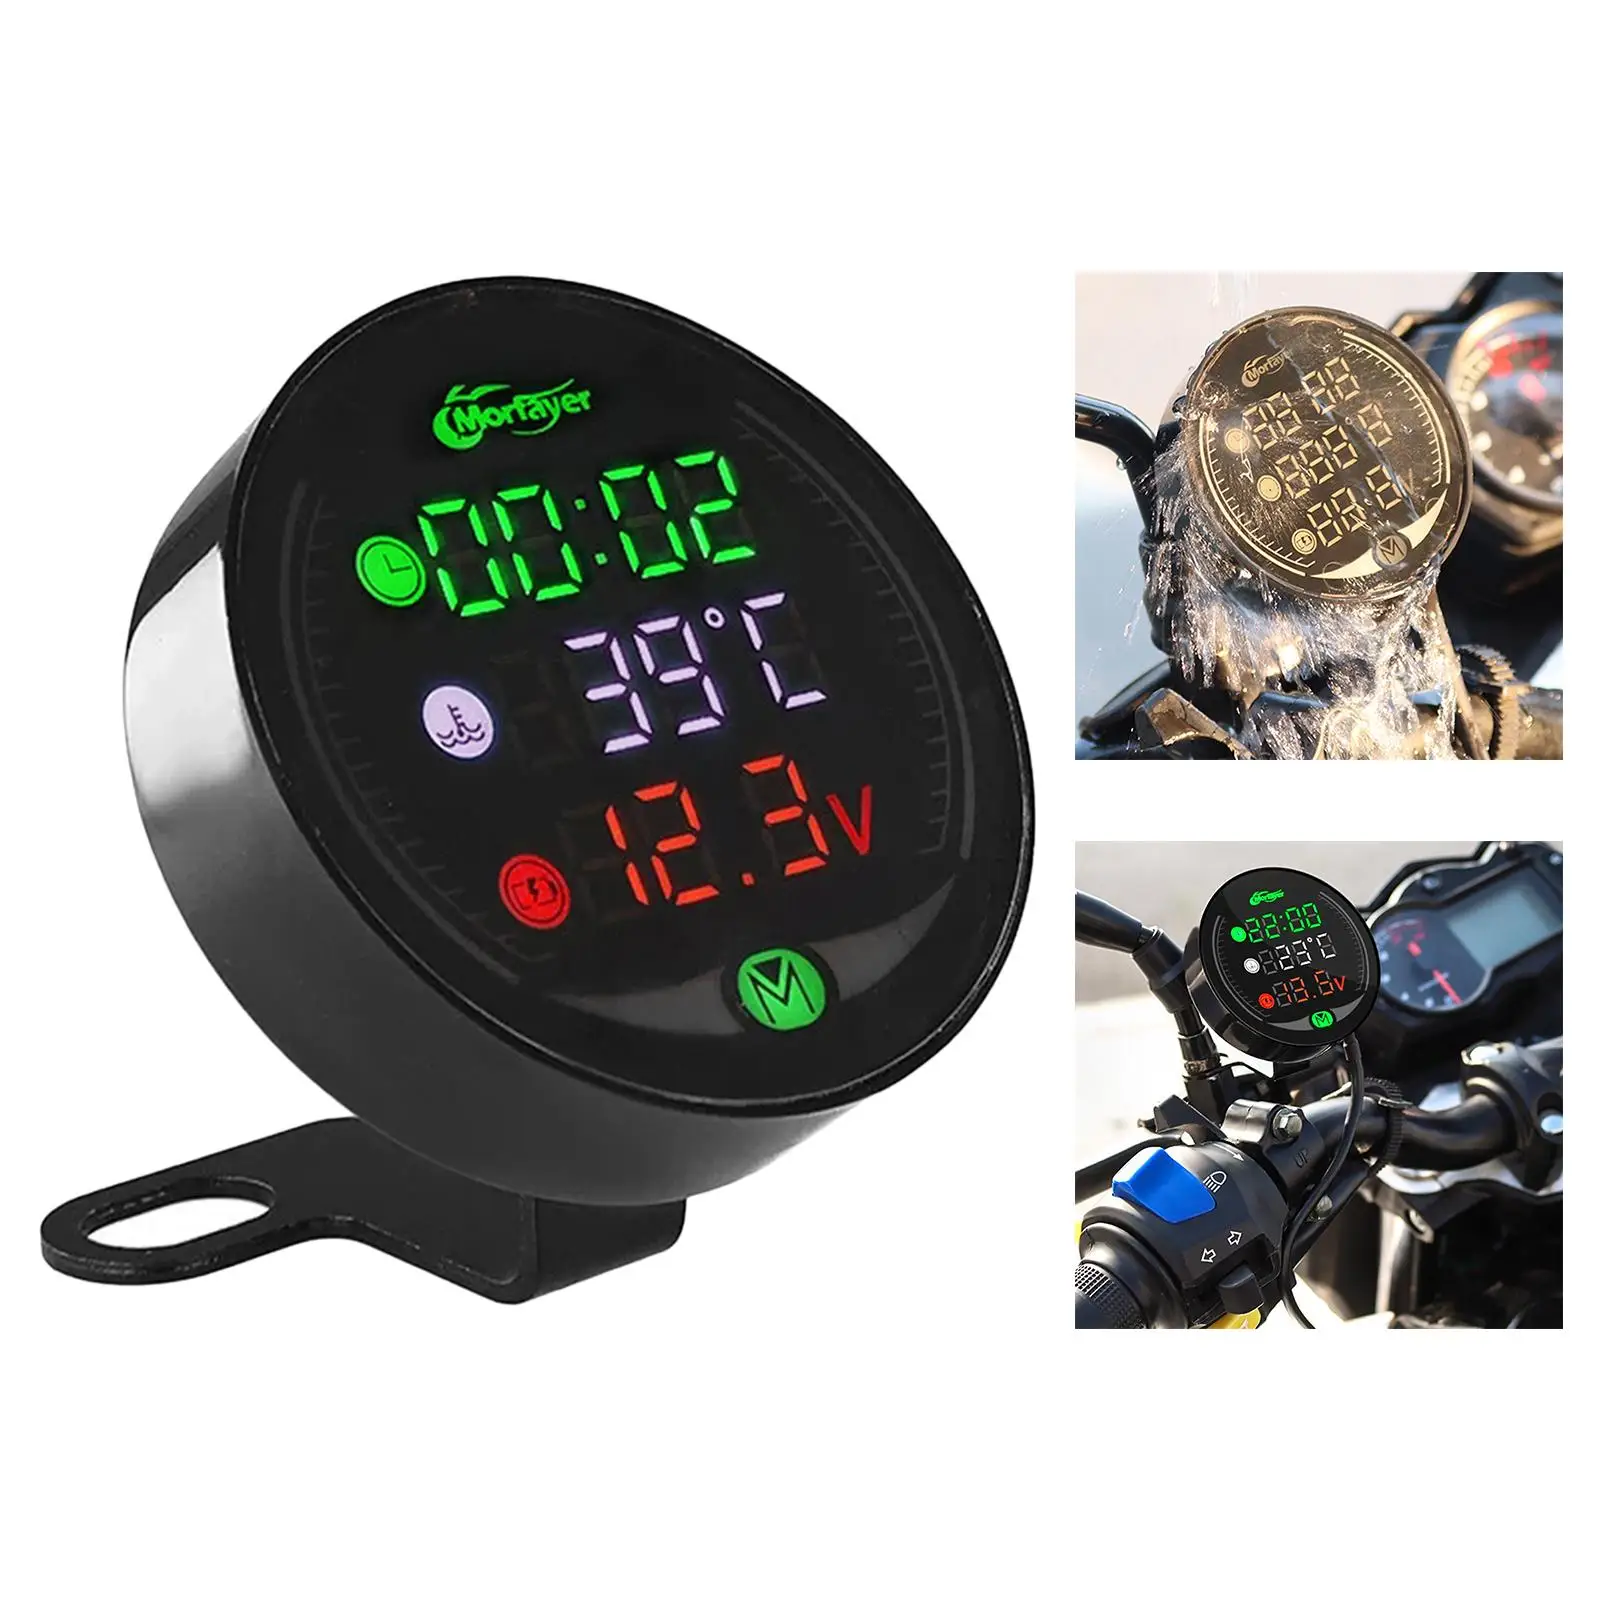 Night Motorcycle Meter meter Temperature Monitor LED Display Multifunction